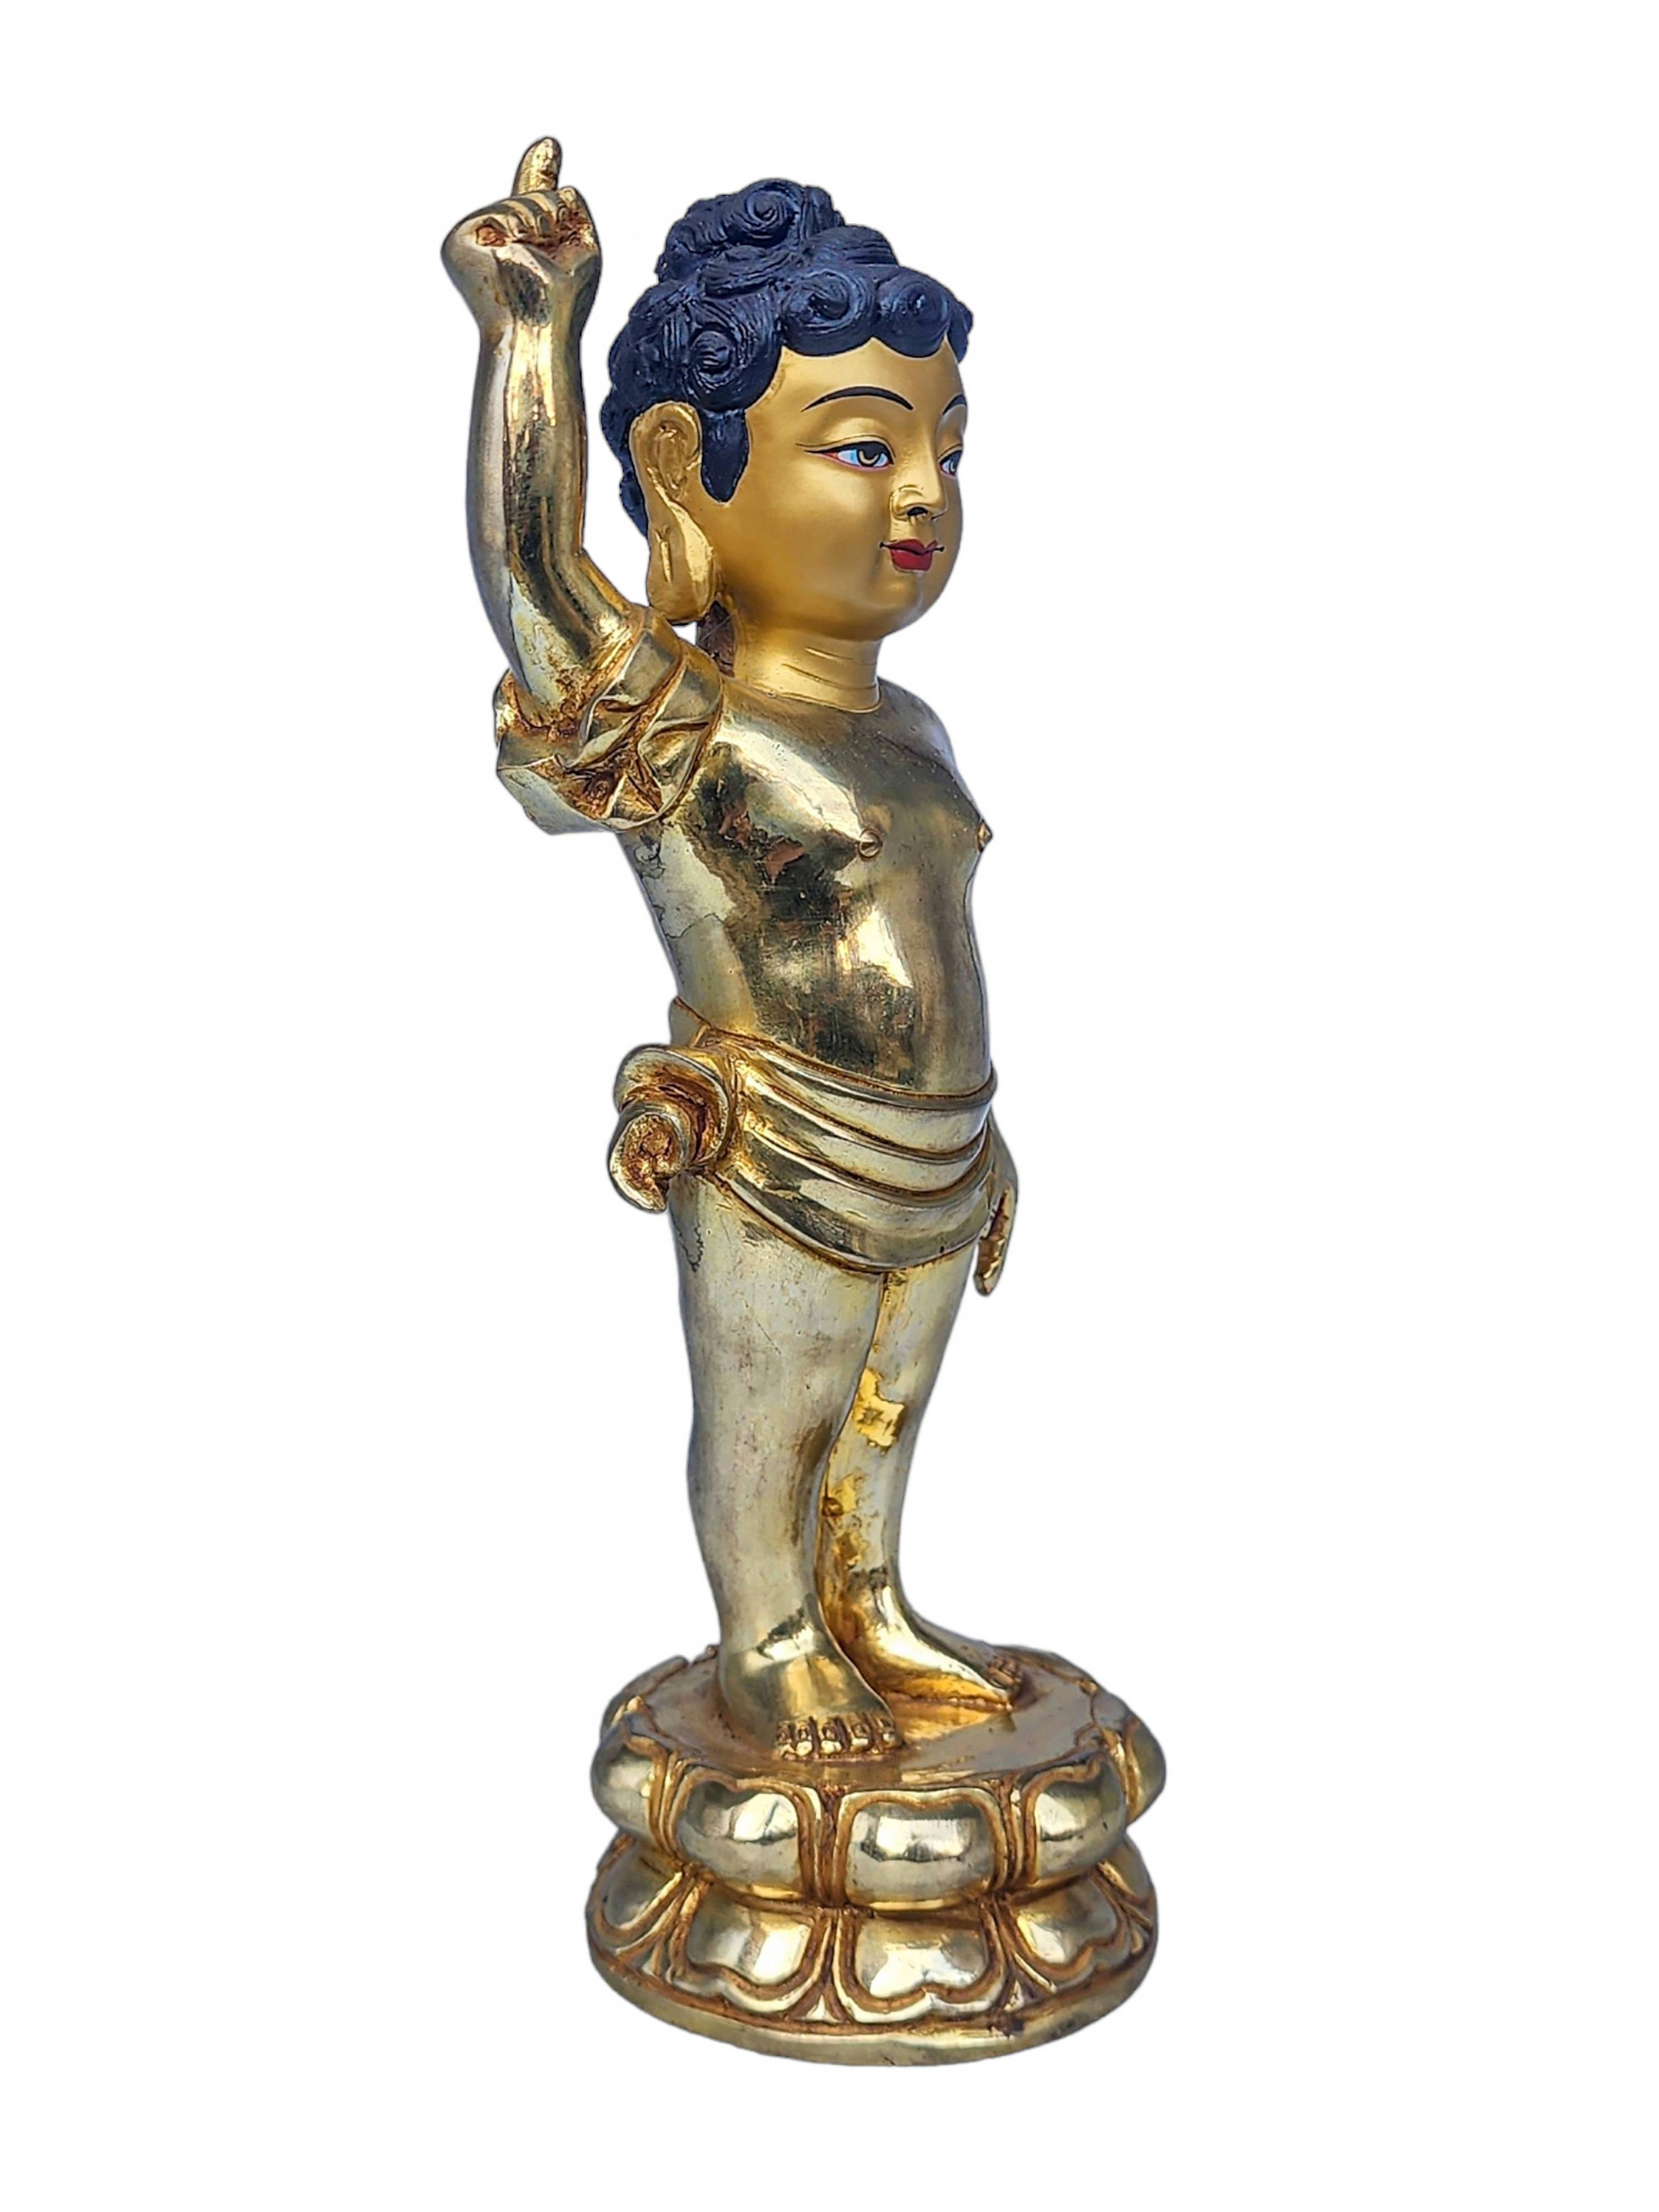 siddhartha Buddha, Buddhist Handmade Statue, face Painted And gold Plated, First Stage Of Buddha Life Story, Baby Buddha